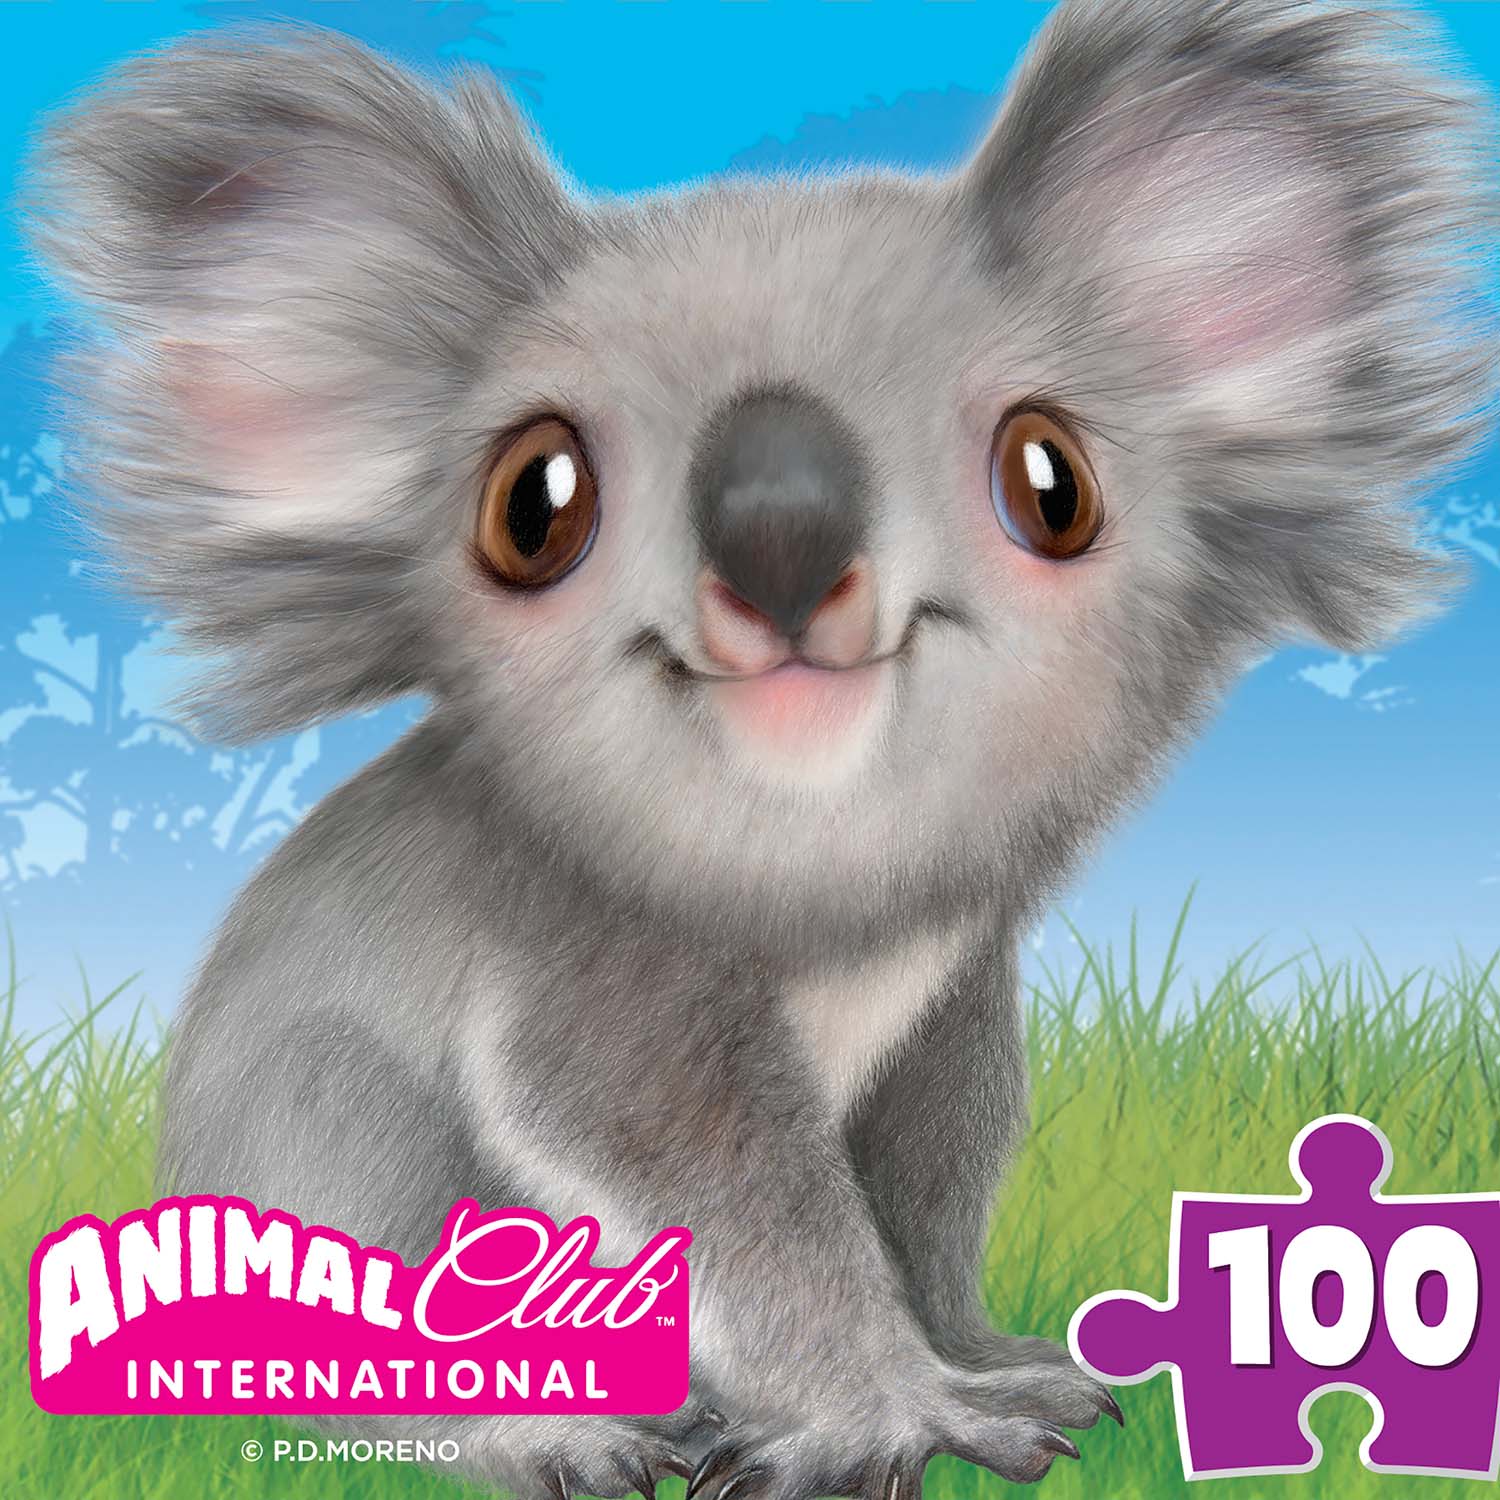 Animal Club Cube Koala